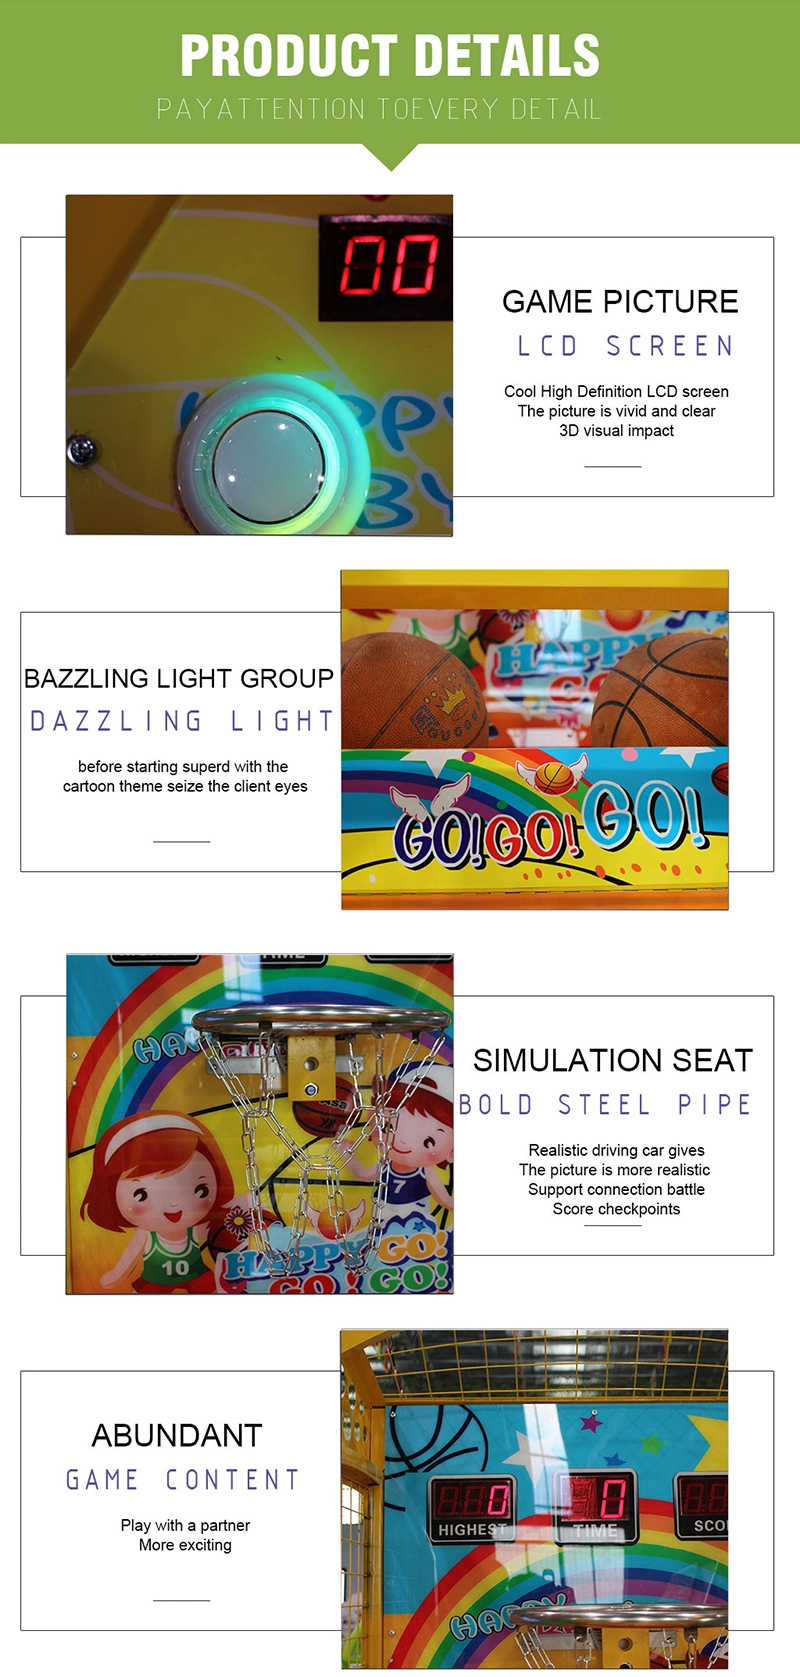 Kids Playground Hot Sale for Children Basketball Game Machine Shooting Ball Arcade Game Machine